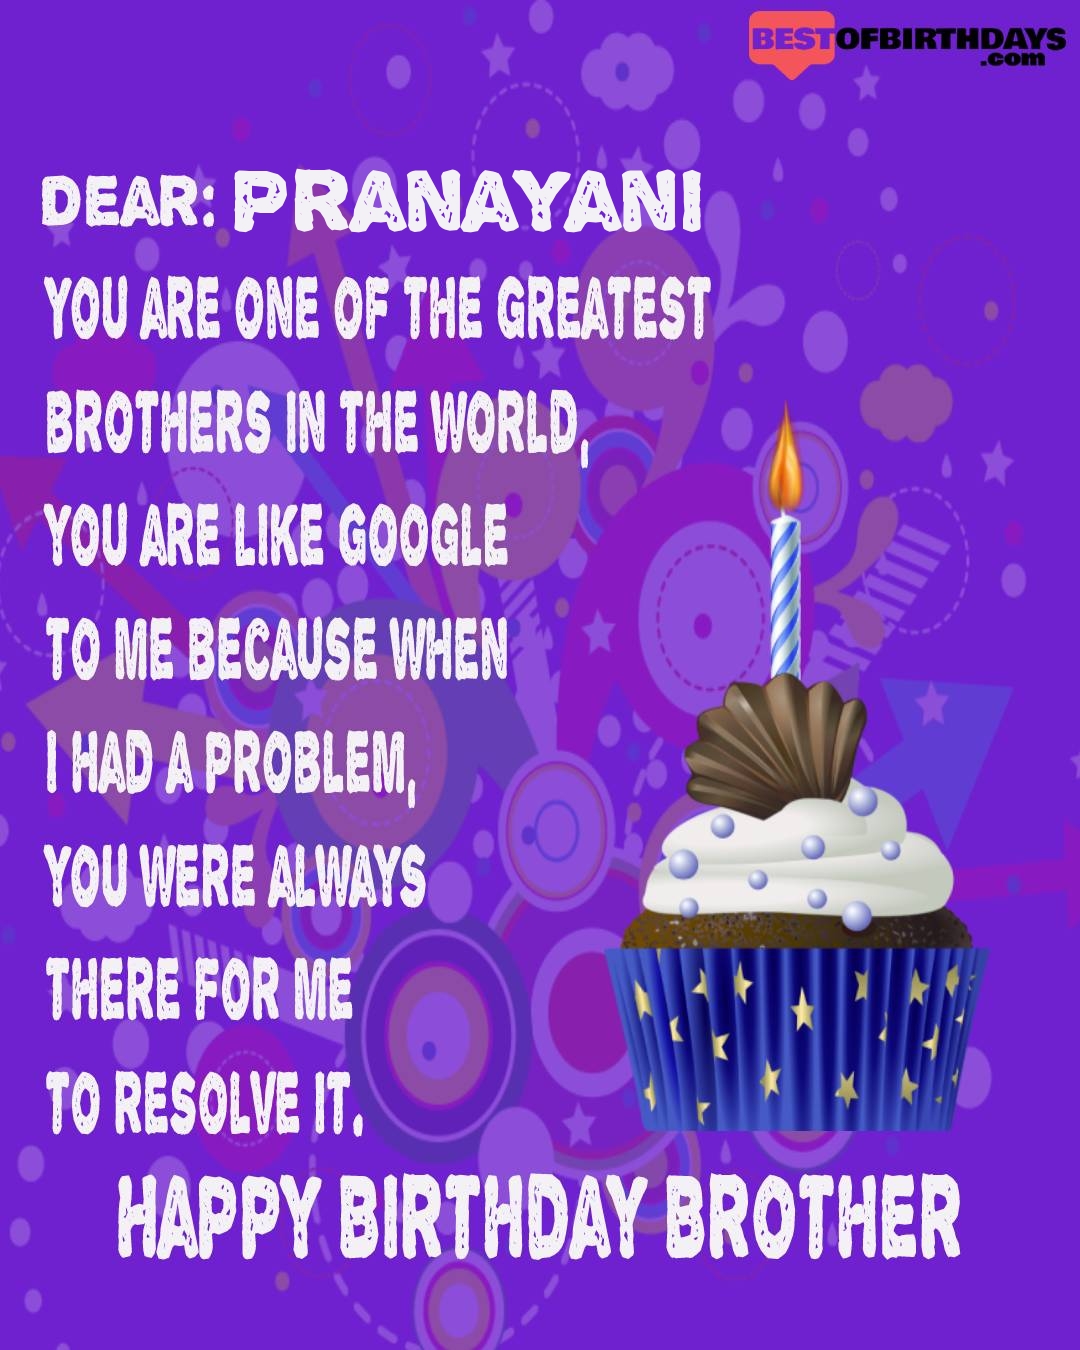 Happy birthday pranayani bhai brother bro